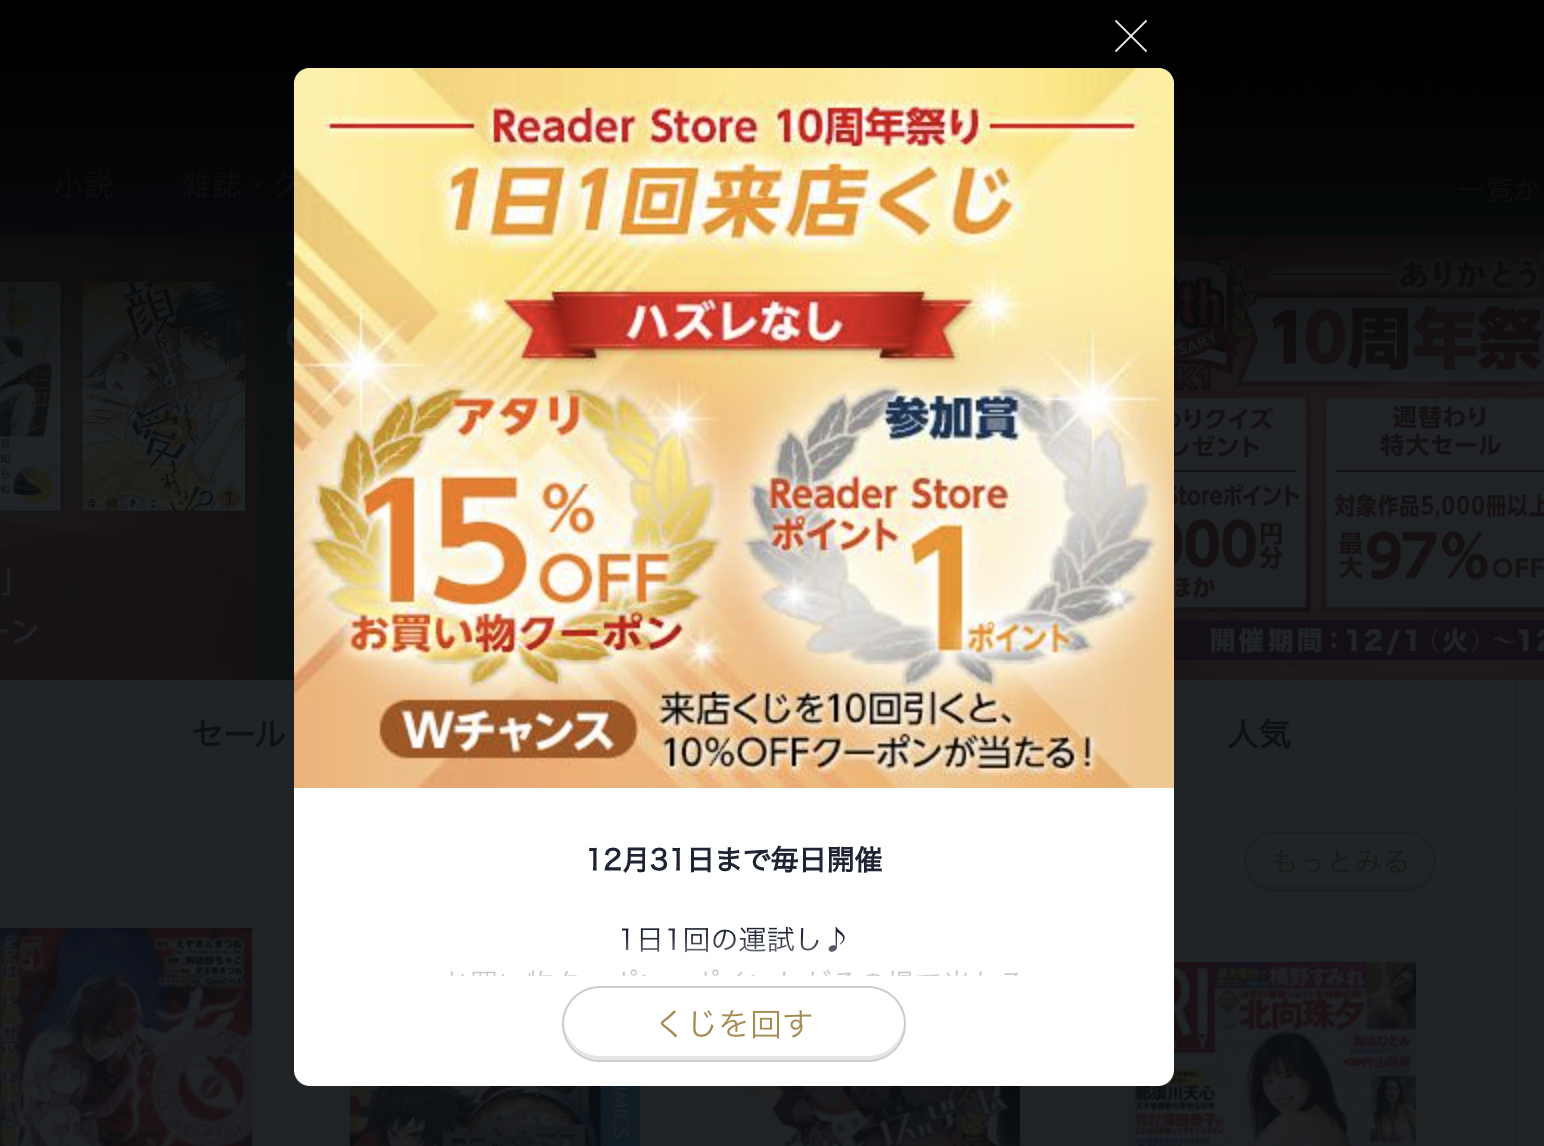 Reader Store